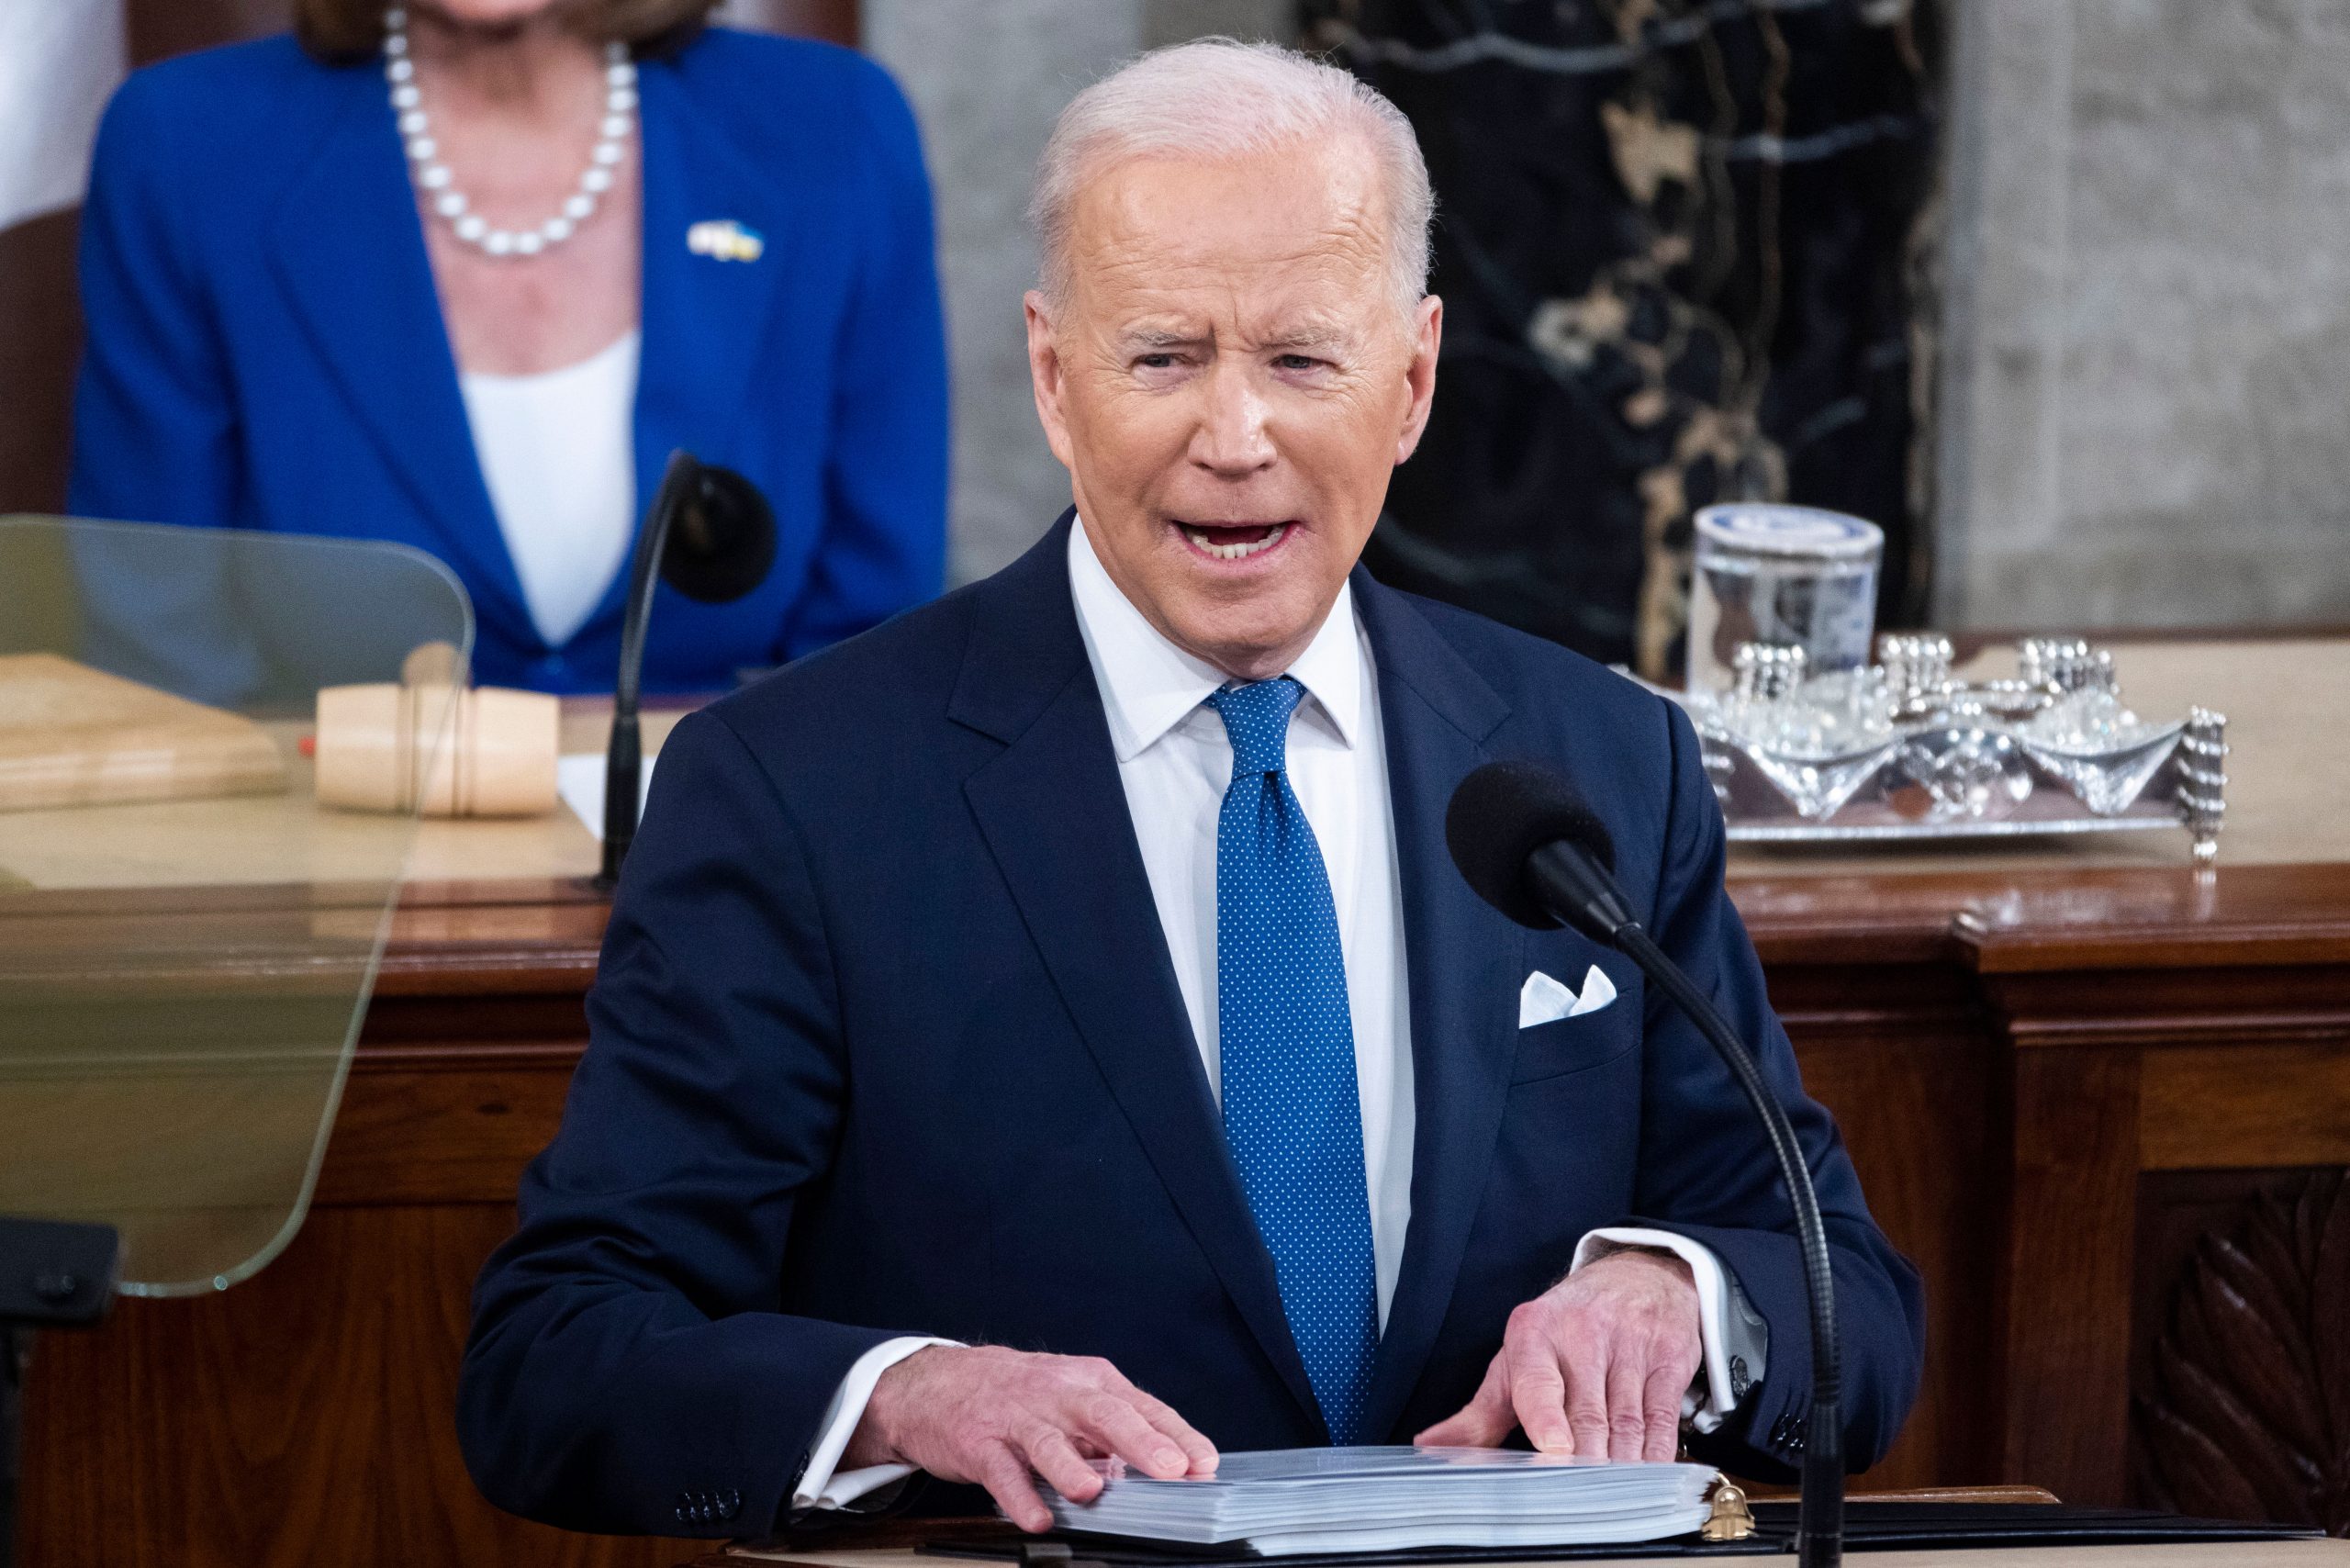 Joe Biden to introduce ‘billionaire minimum income tax’ in 2023 fiscal budget